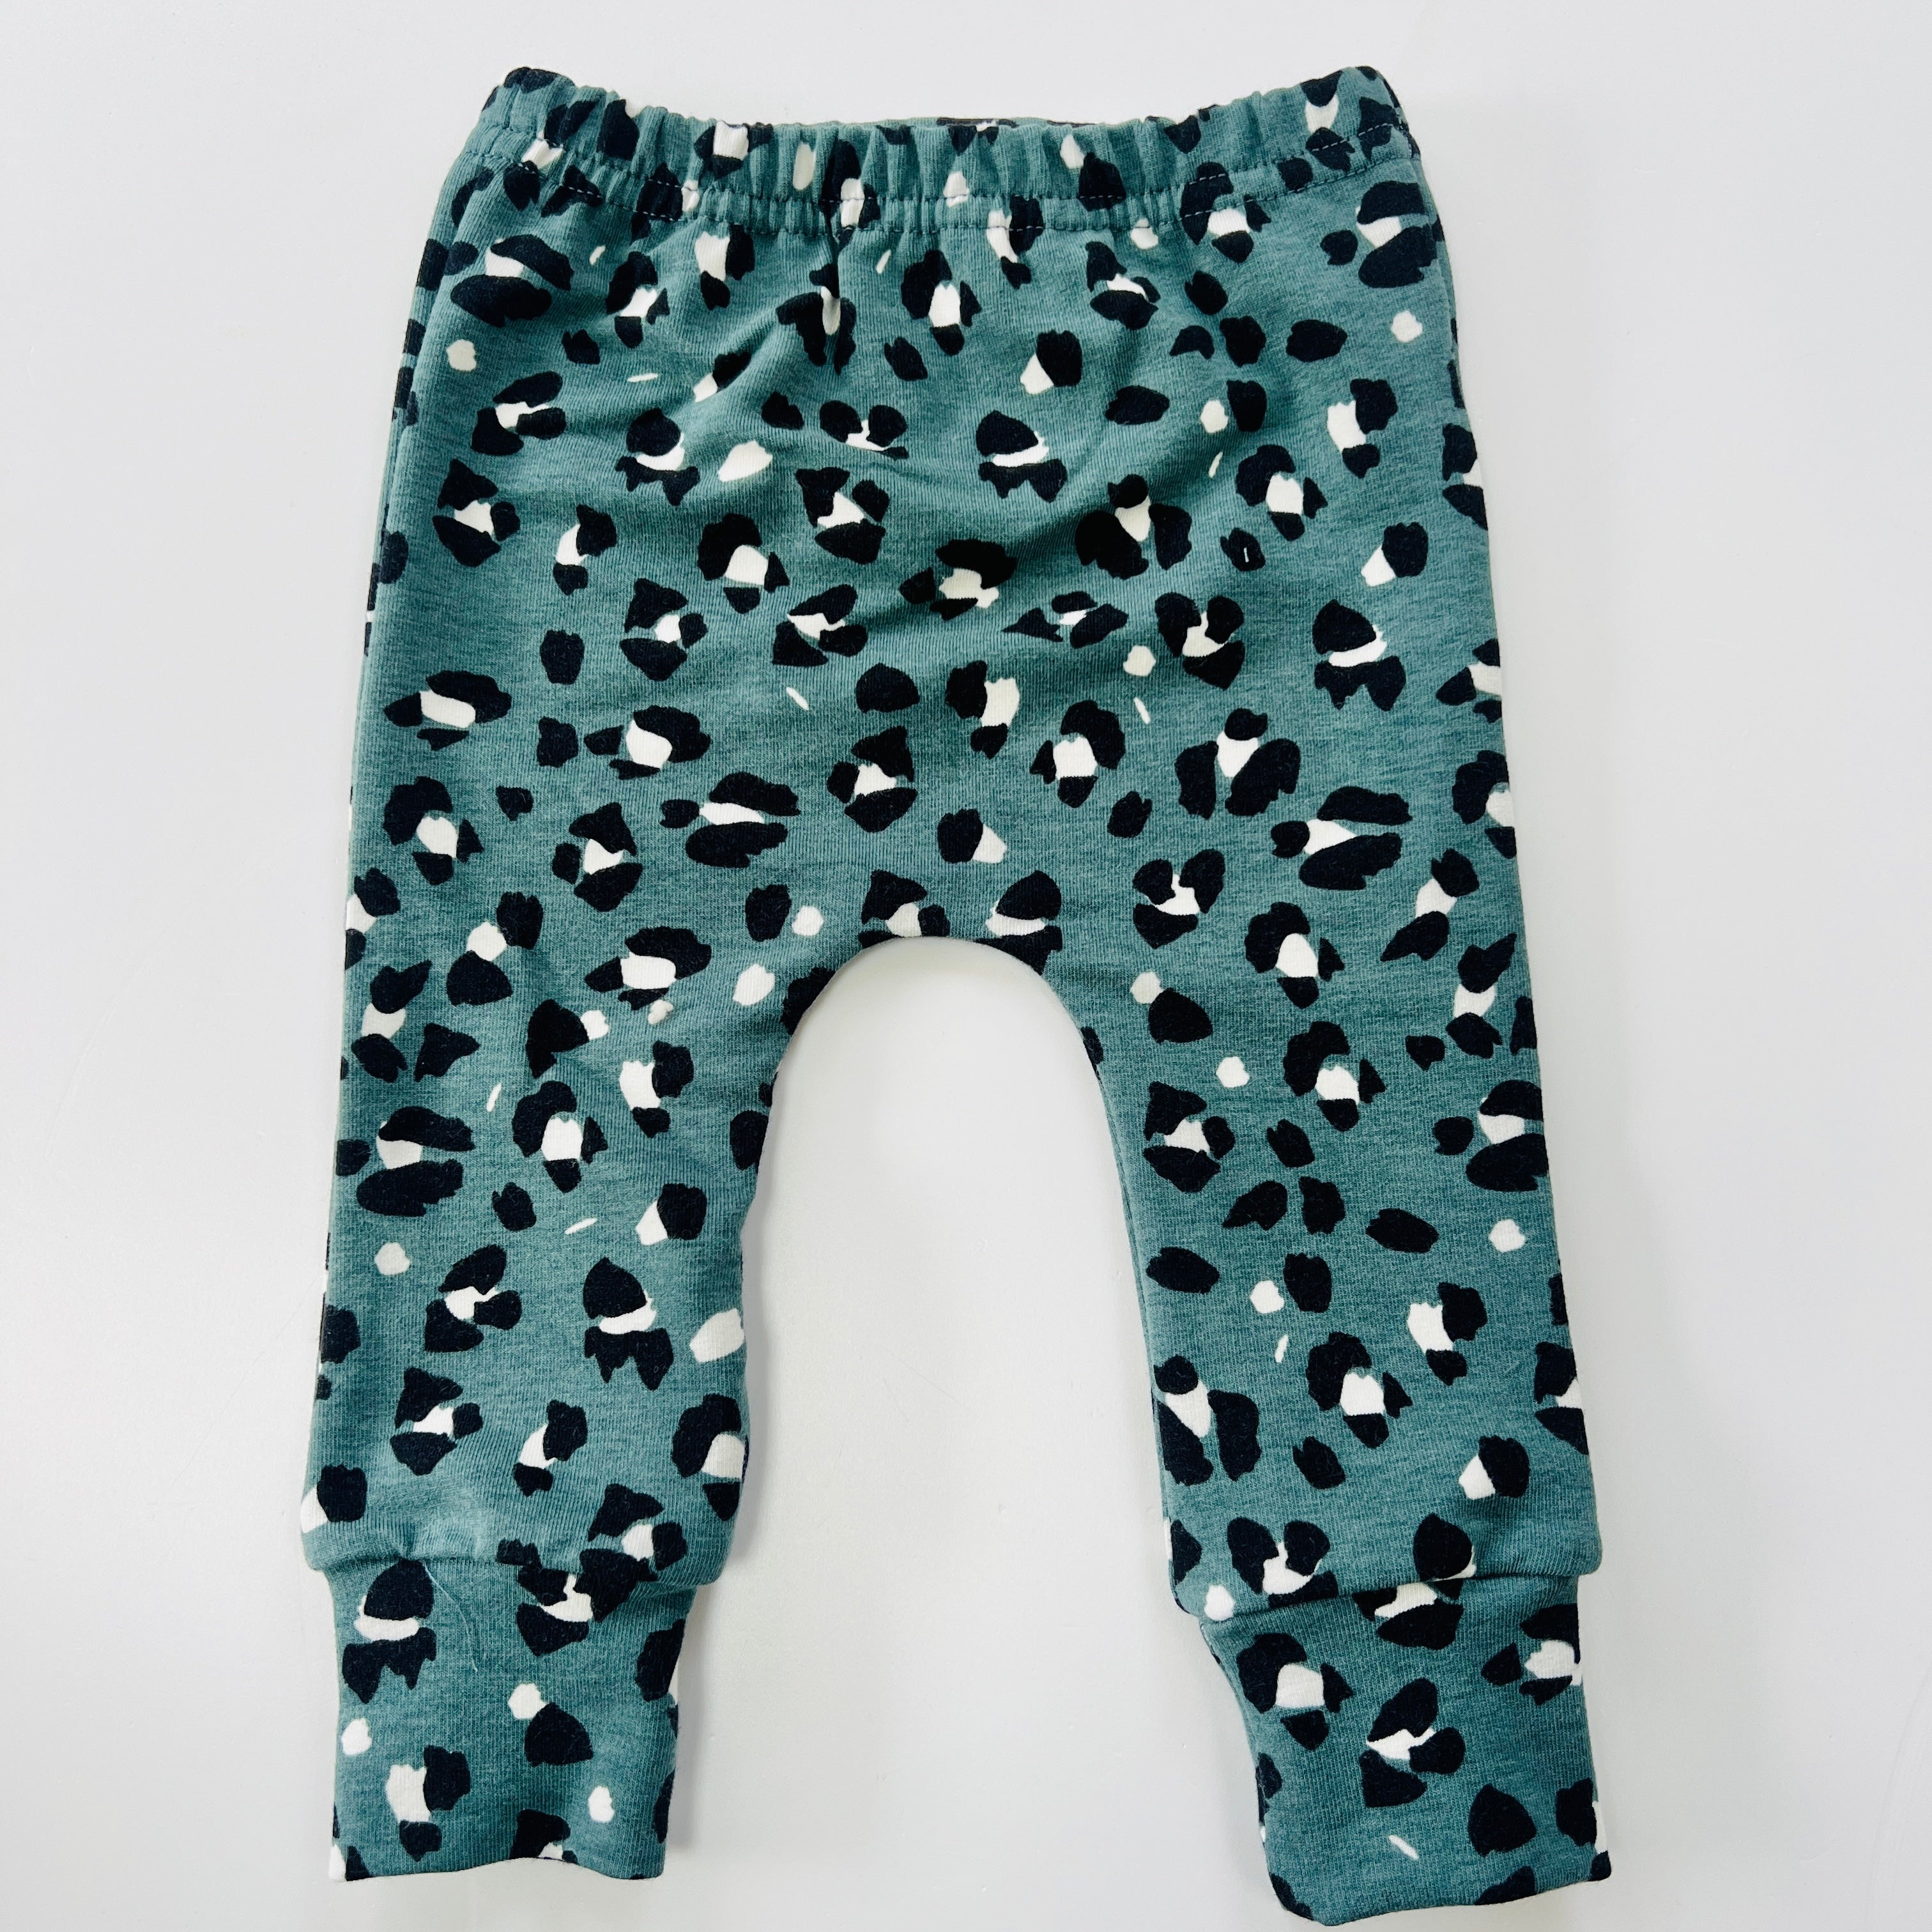 Eddie & Bee organic cotton leggings in Pine "Leopard Spot" print. (Thicker Jersey Fabric)